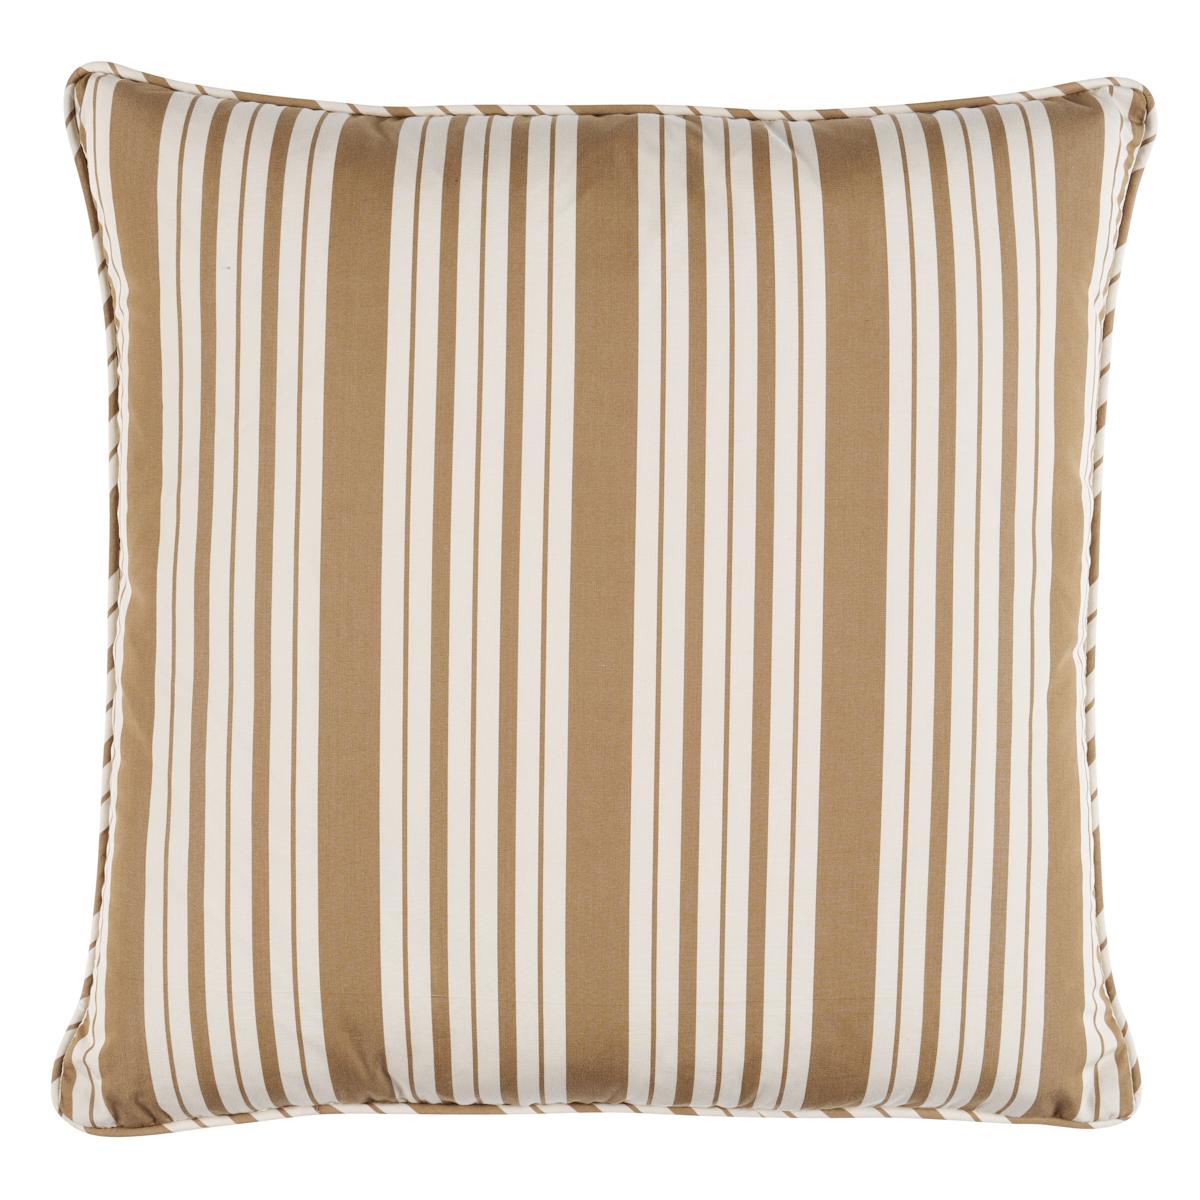 Markie Stripe Pillow in Neutral 18 x18" For Sale